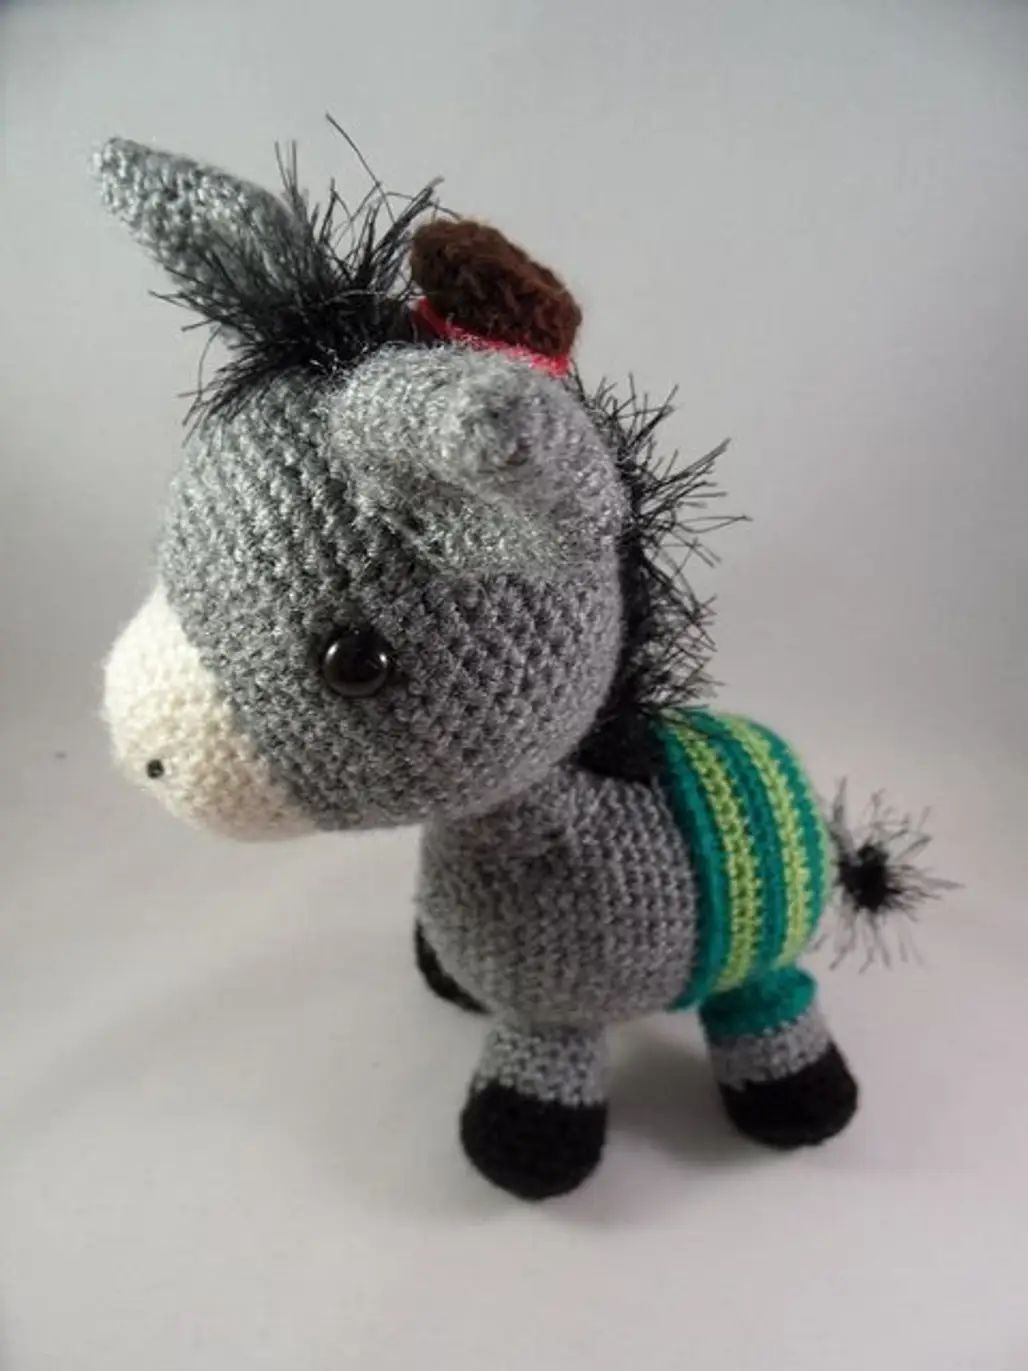 Eduardo the Donkey